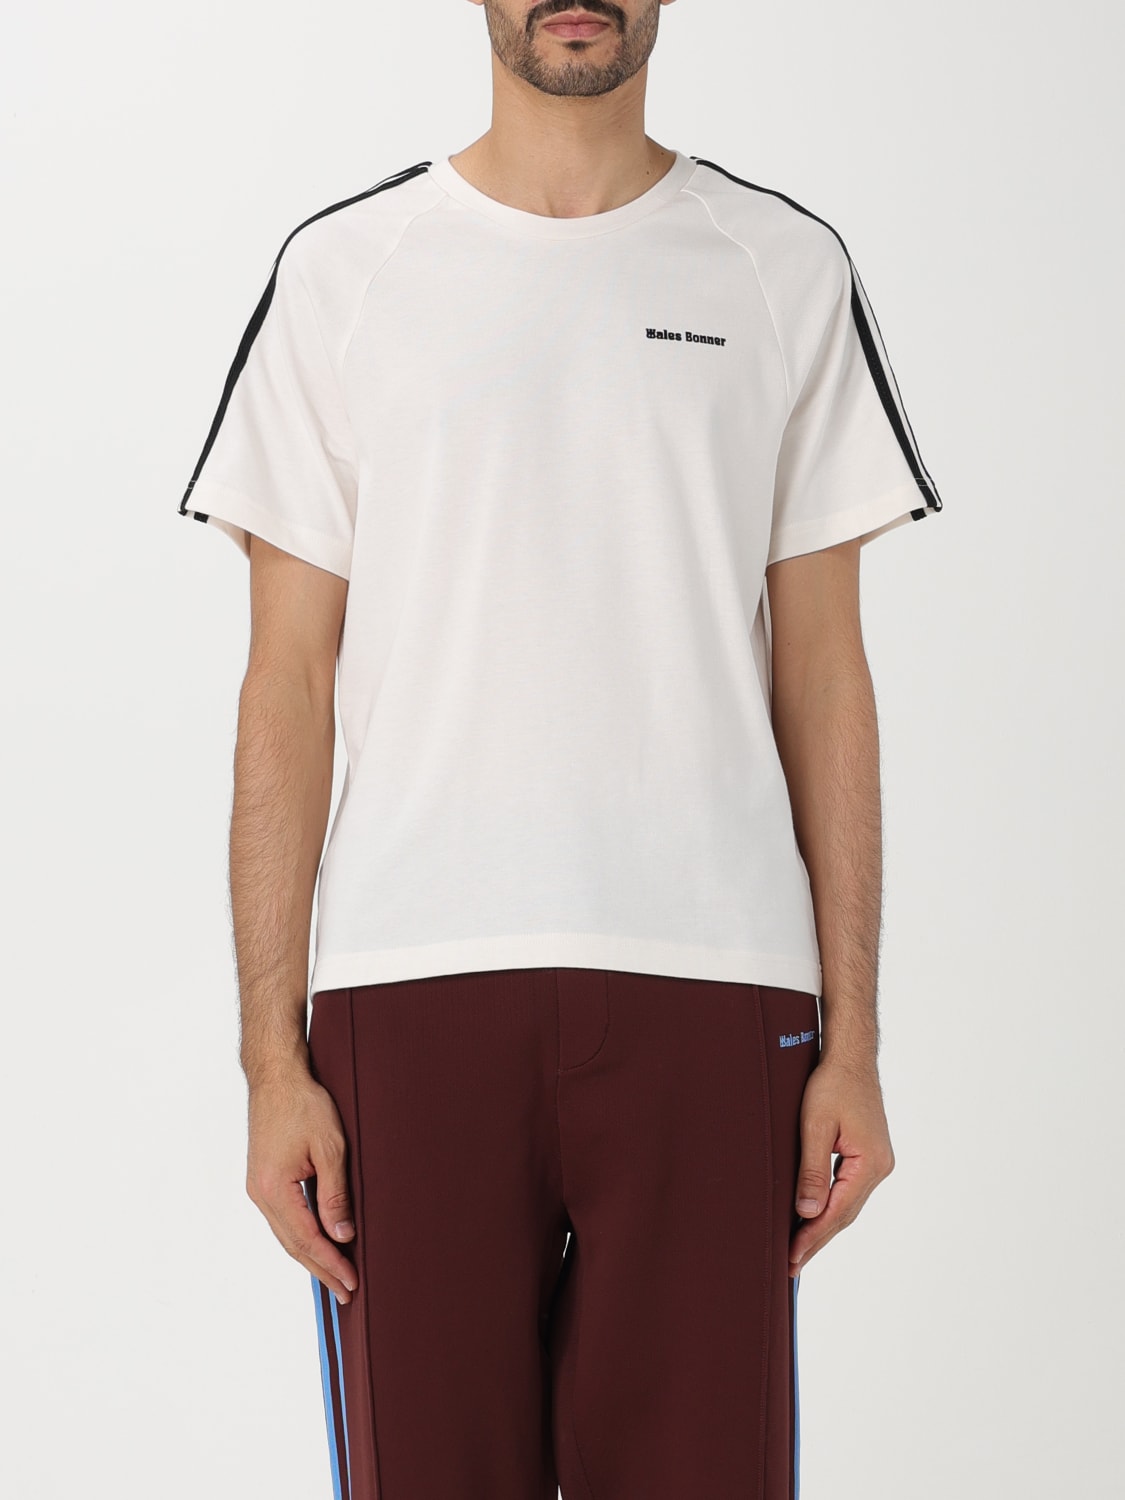 ADIDAS ORIGINALS BY WALES BONNER: t-shirt for man - White | Adidas